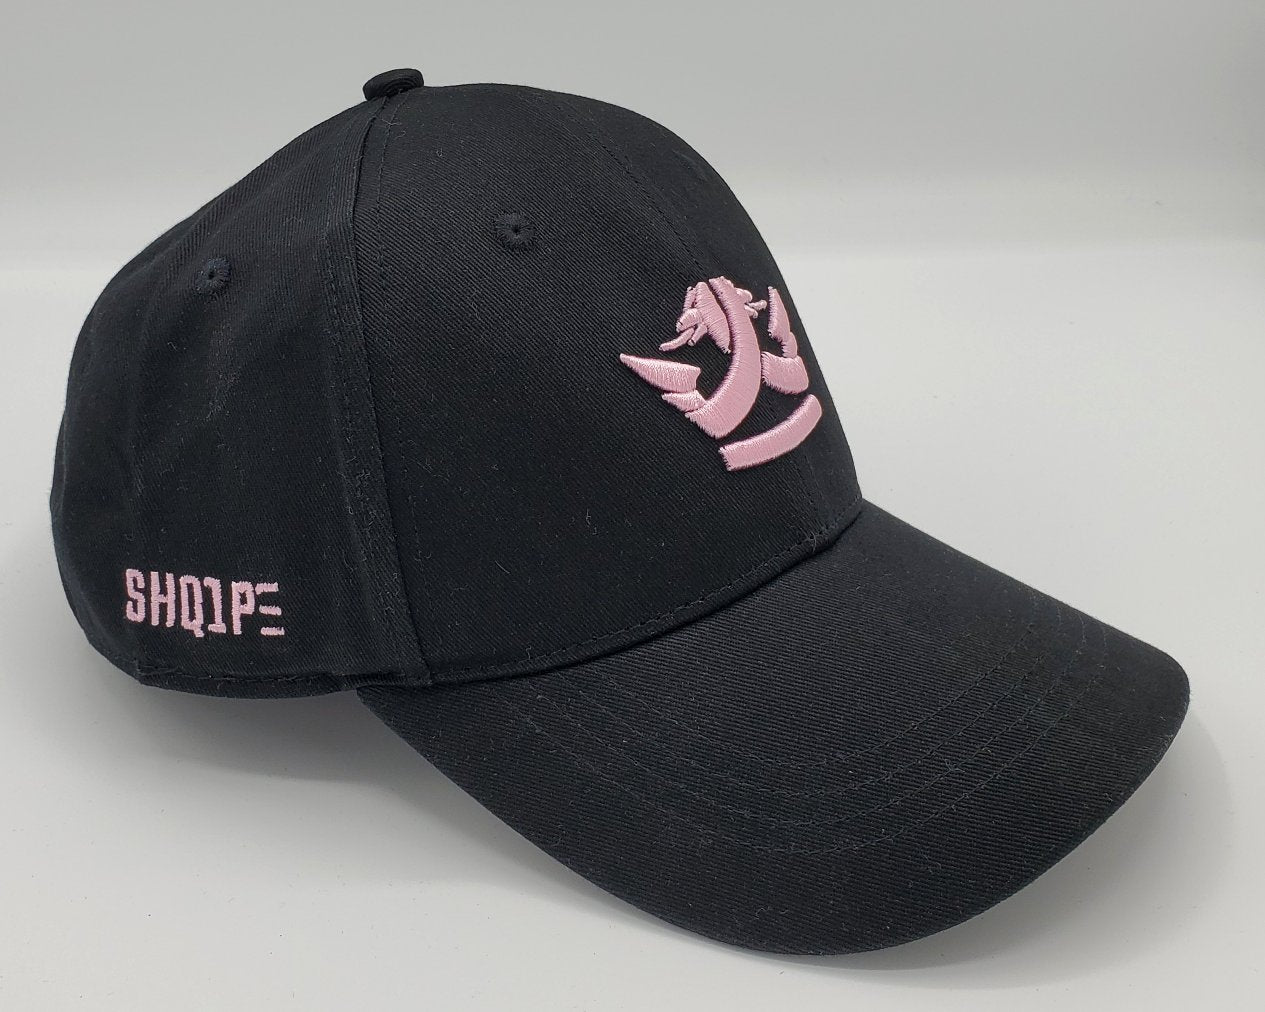 1st Edition Shq1pe Baseball Cap Black/Pink